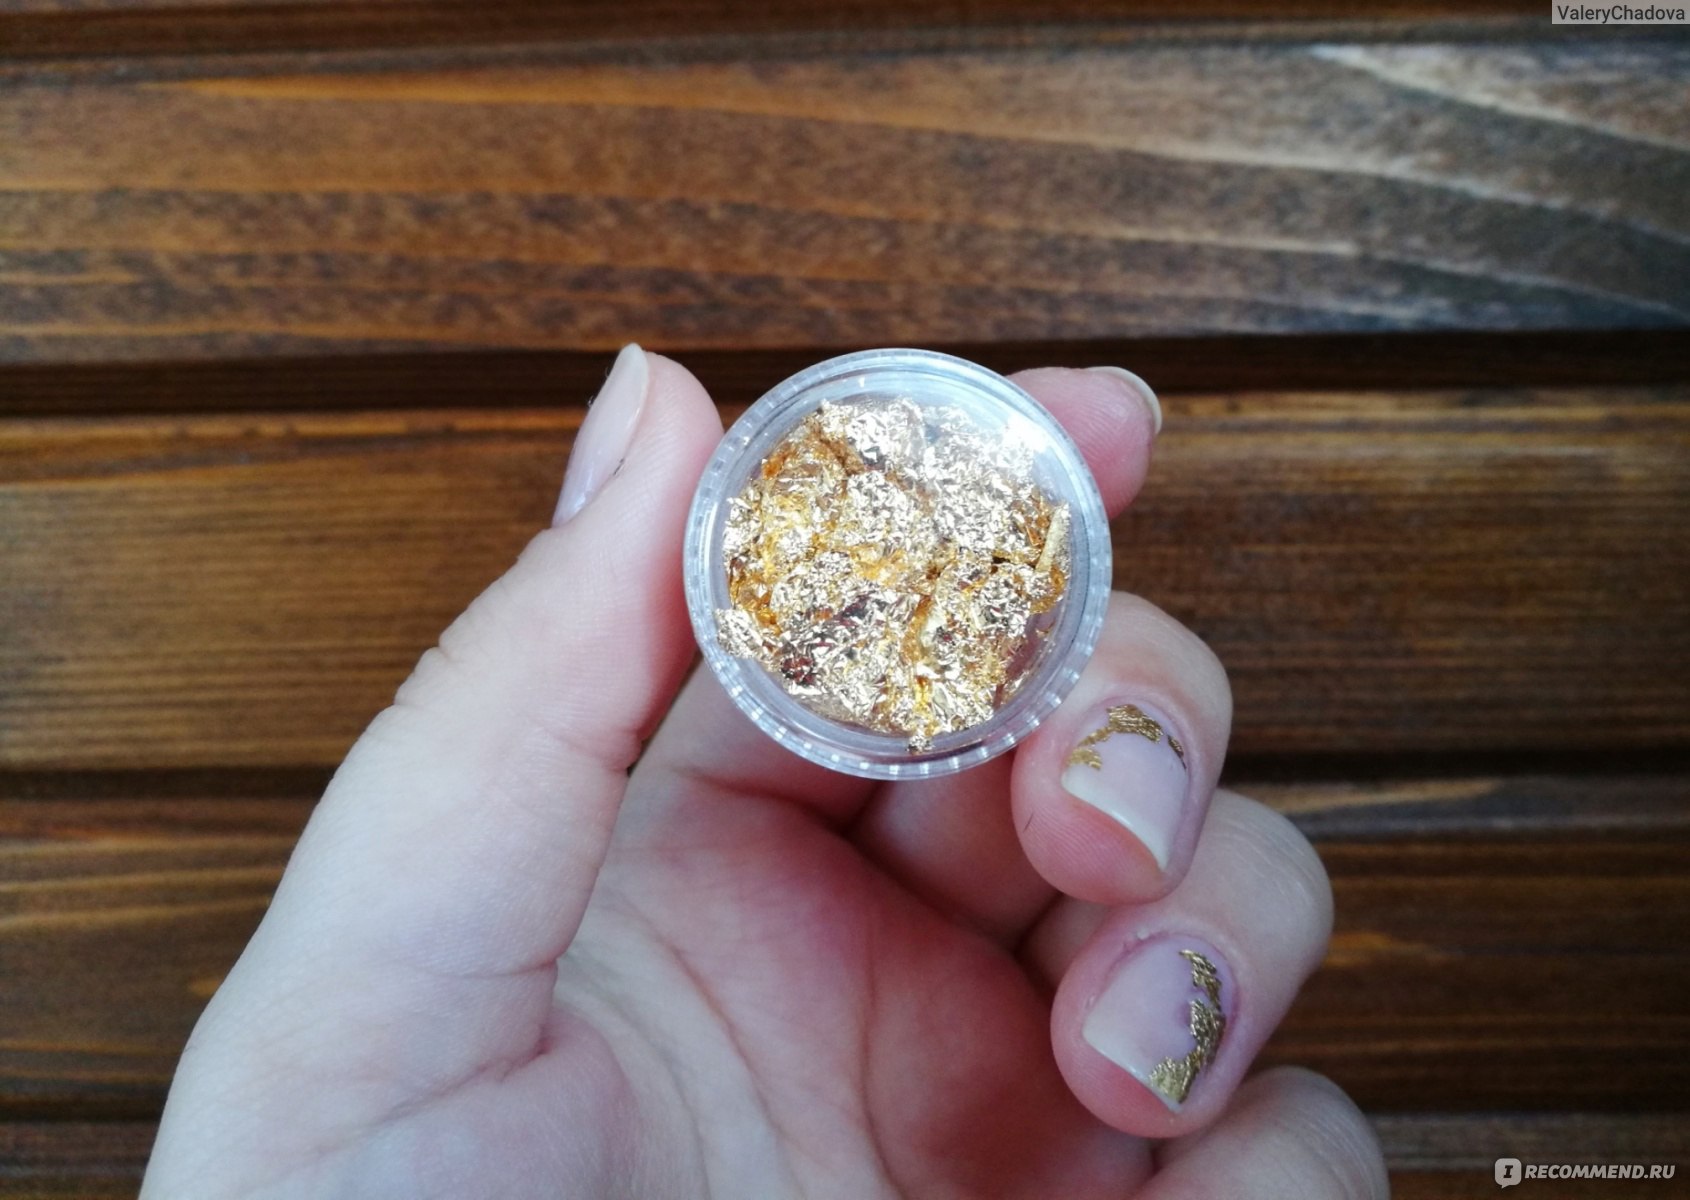 Поталь Aliexpress Box Imitation Gold Sliver Foil Crystal Epoxy Gold LeafDIY Scrapbook Crafts Art Decoration Nail Flake Jewelry Making - «Золотаяпоталь для дизайна ногтей»